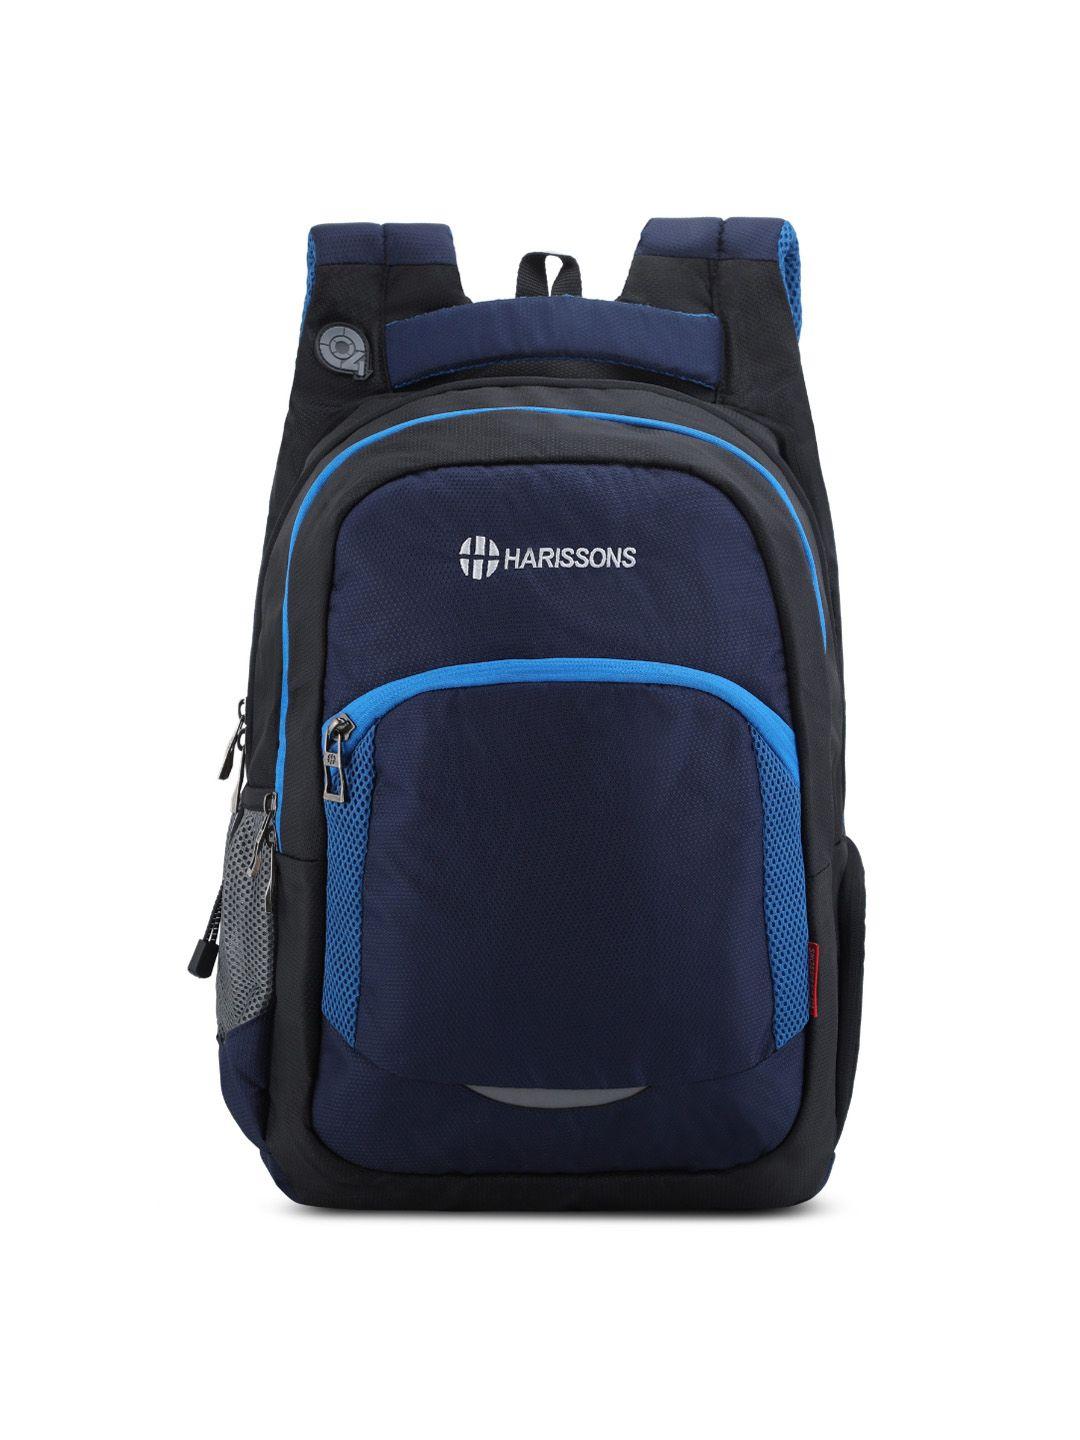 harissons unisex navy blue & black colourblocked backpack